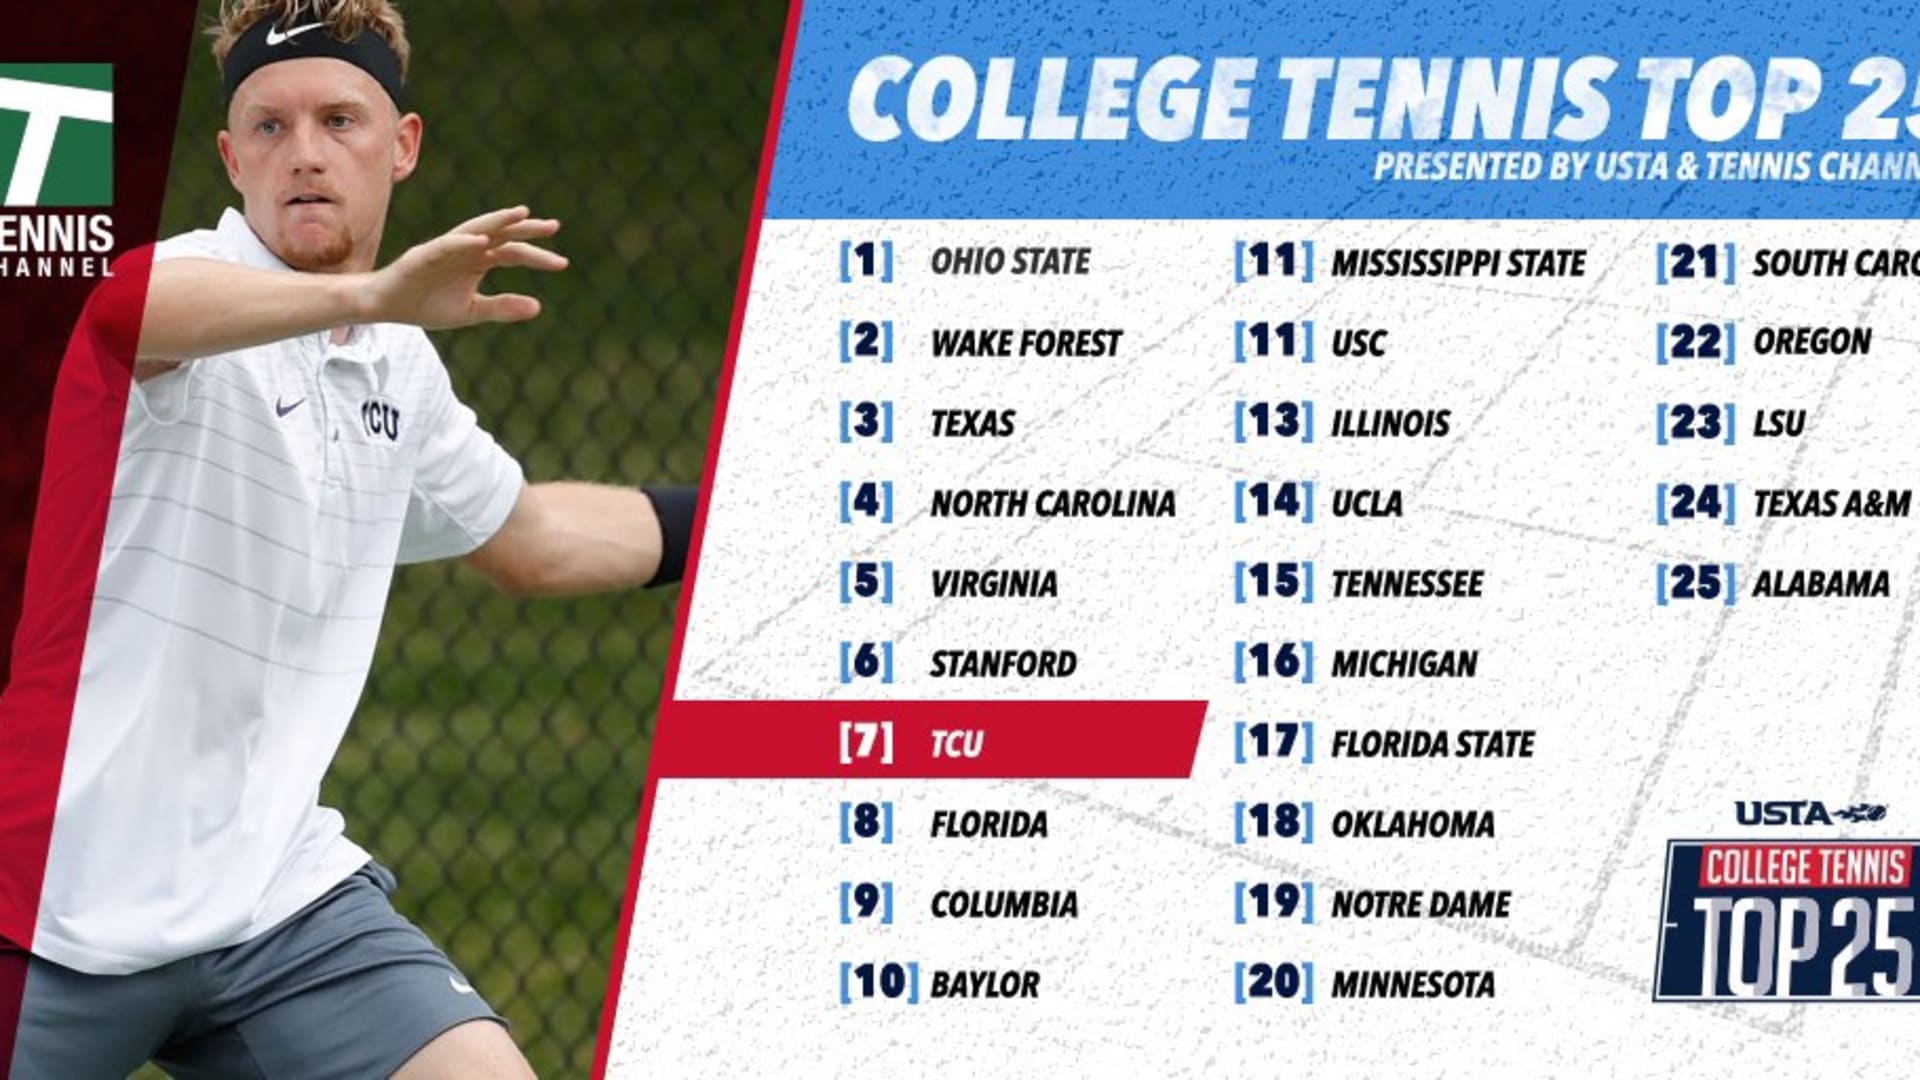 Tennis Channel/USTA College Tennis Top 25 Rankings Feb